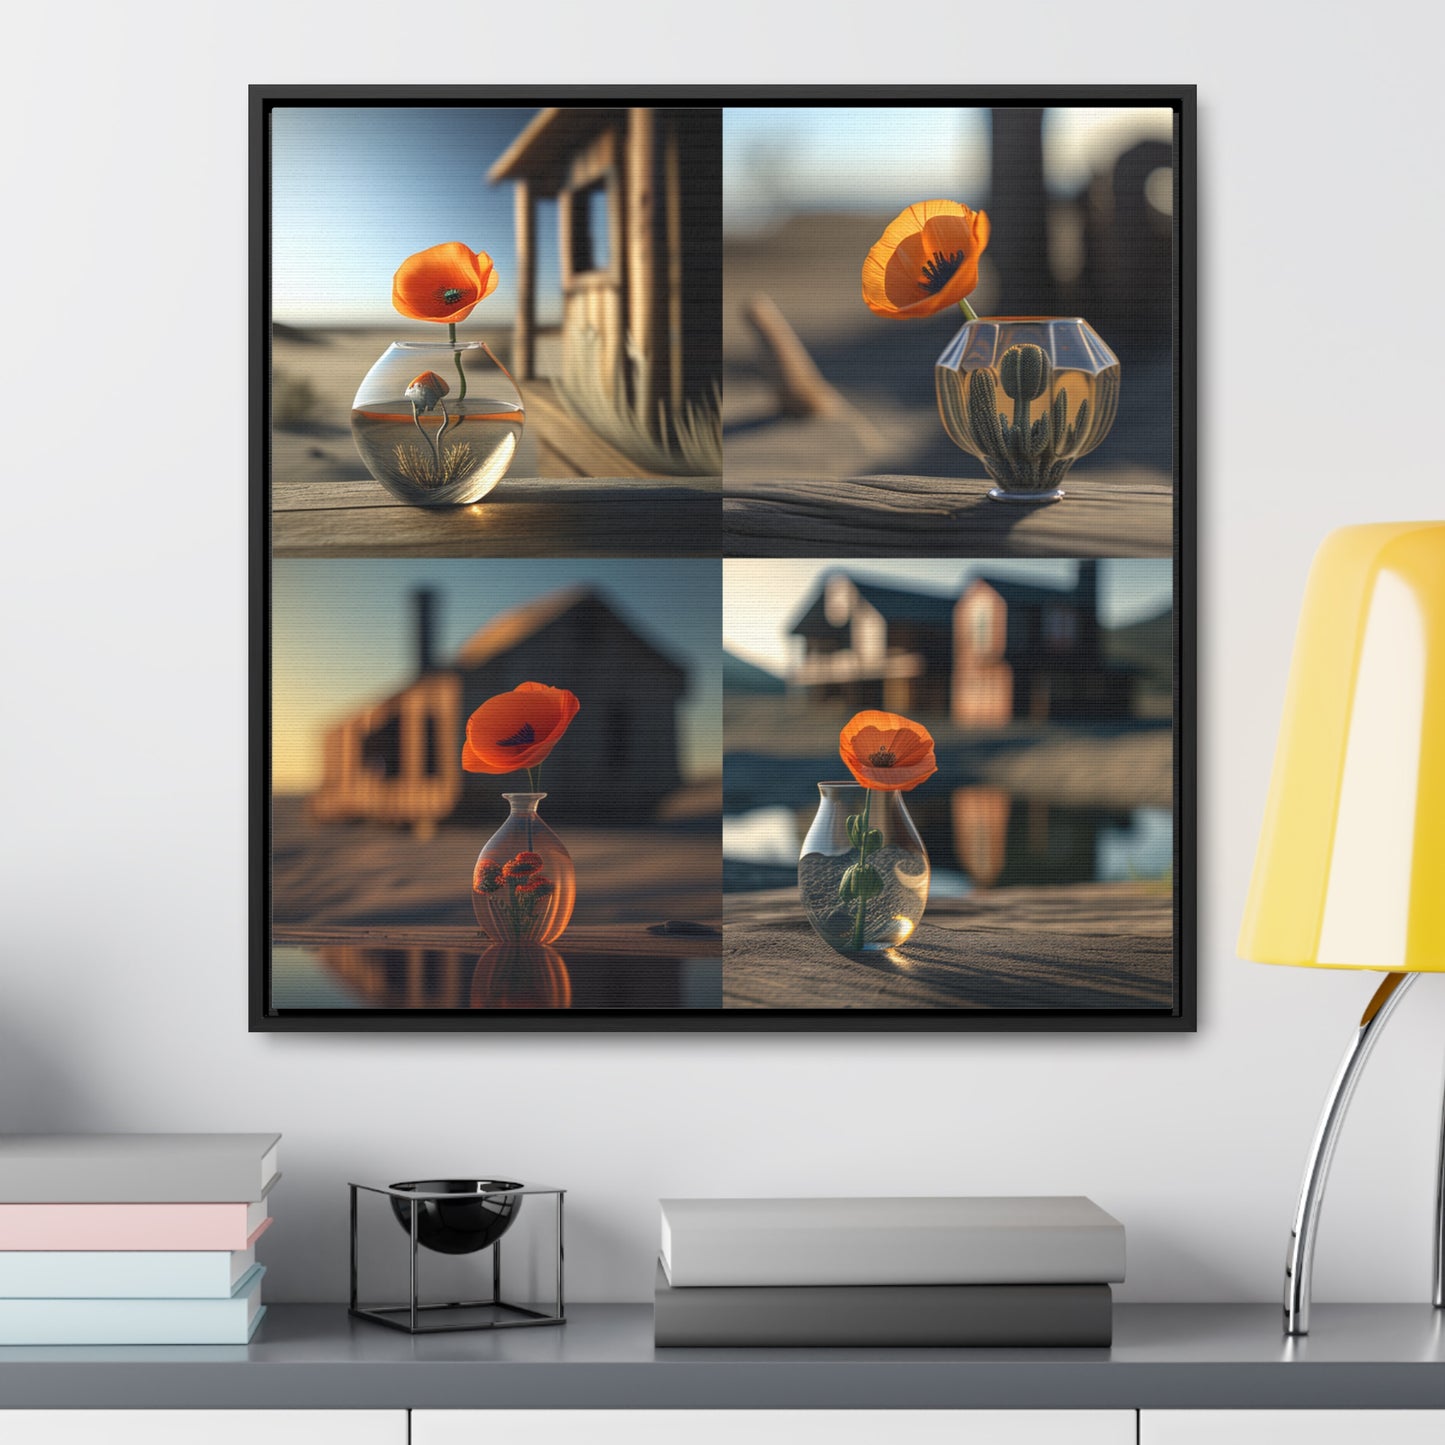 Gallery Canvas Wraps, Square Frame Orange Poppy in a Vase 5